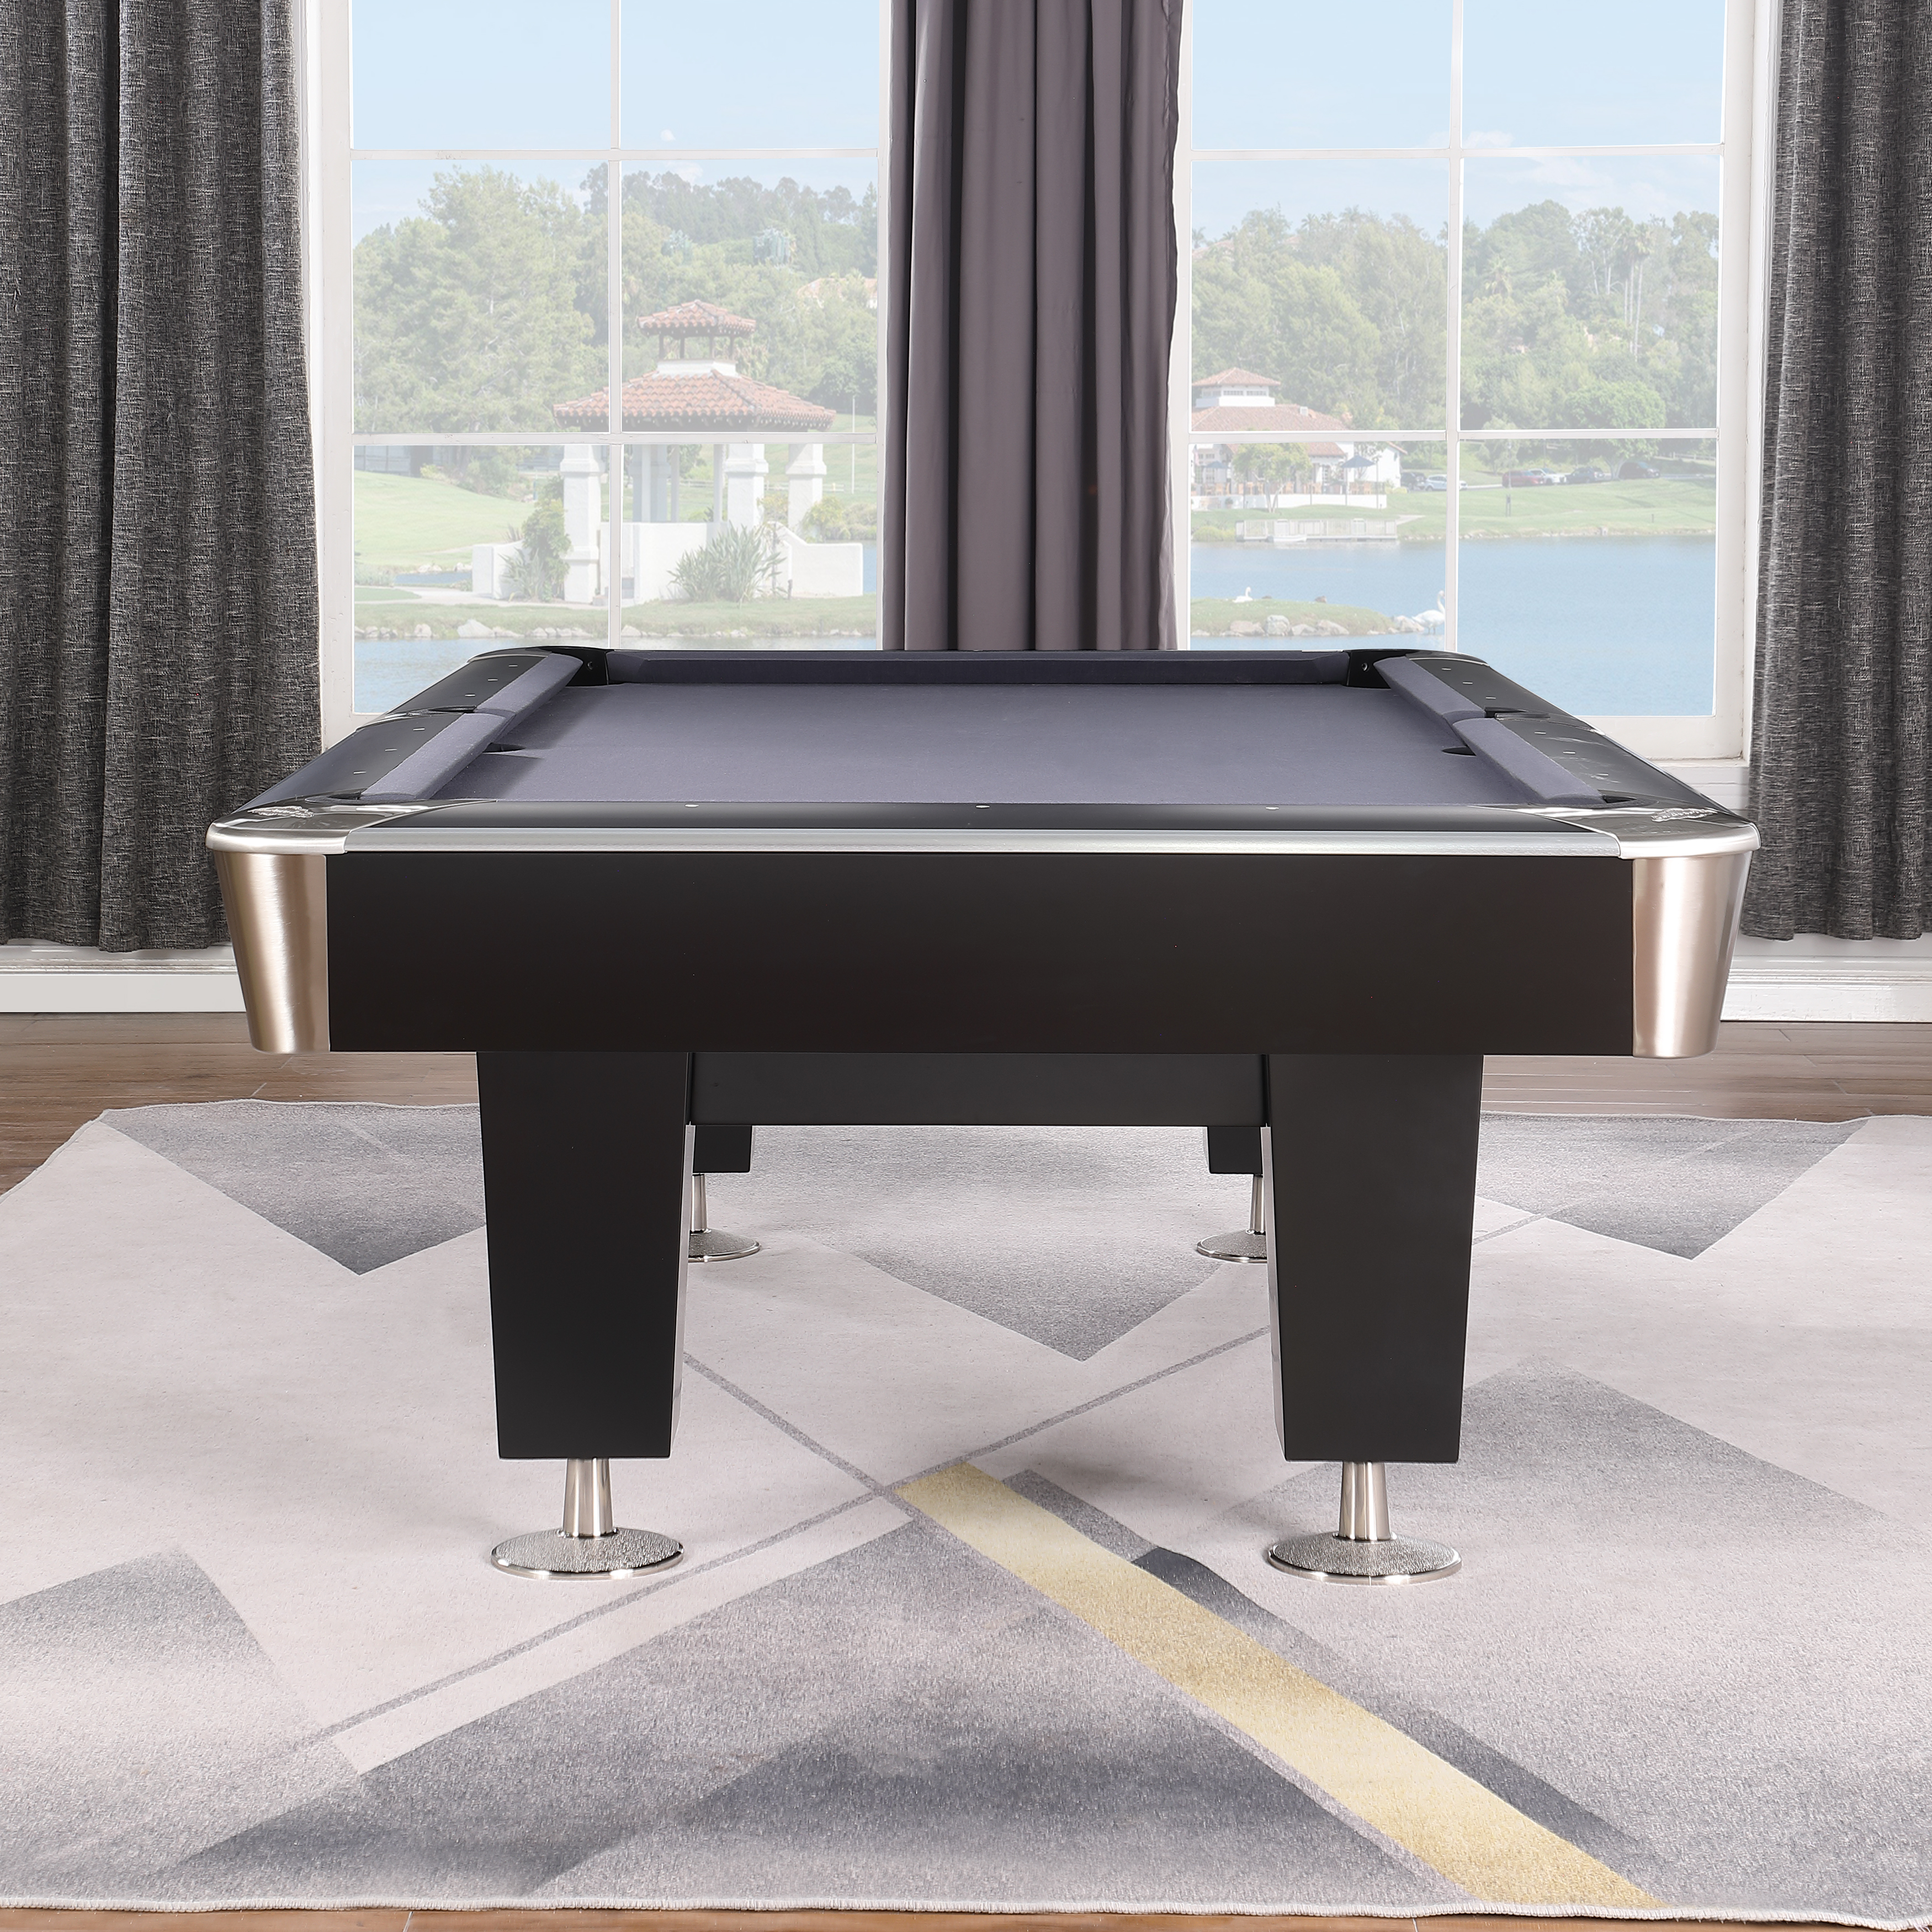 SC0110-PR: Snookertafel Lexor X-treme II Pro-series EPBF pockets, black-RVS  #8